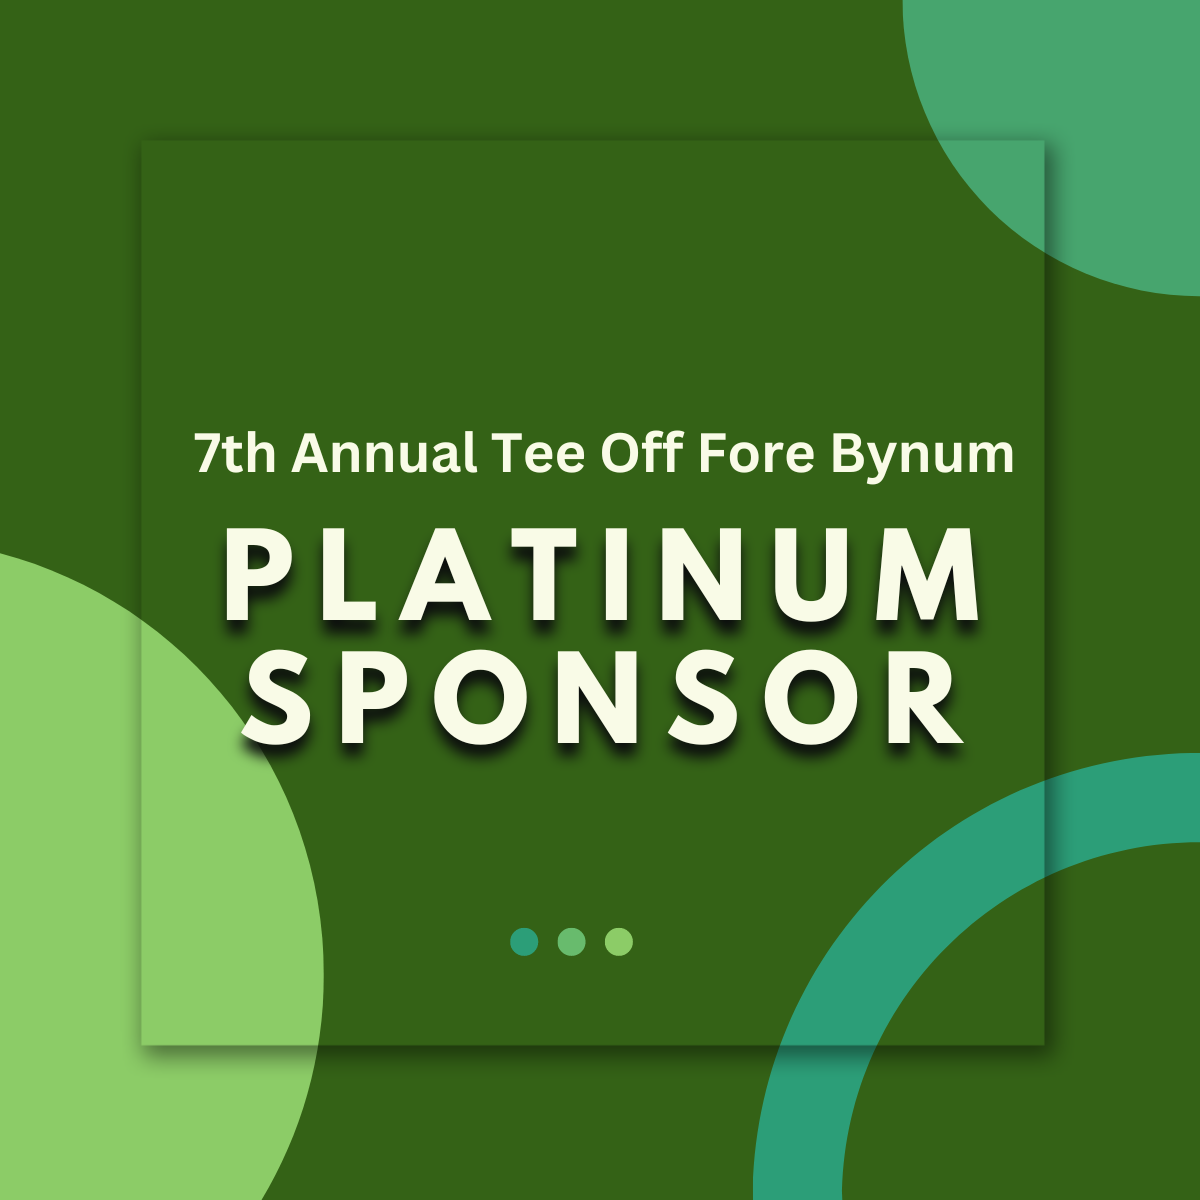 Platinum Sponsor - Tee Off Fore Bynum